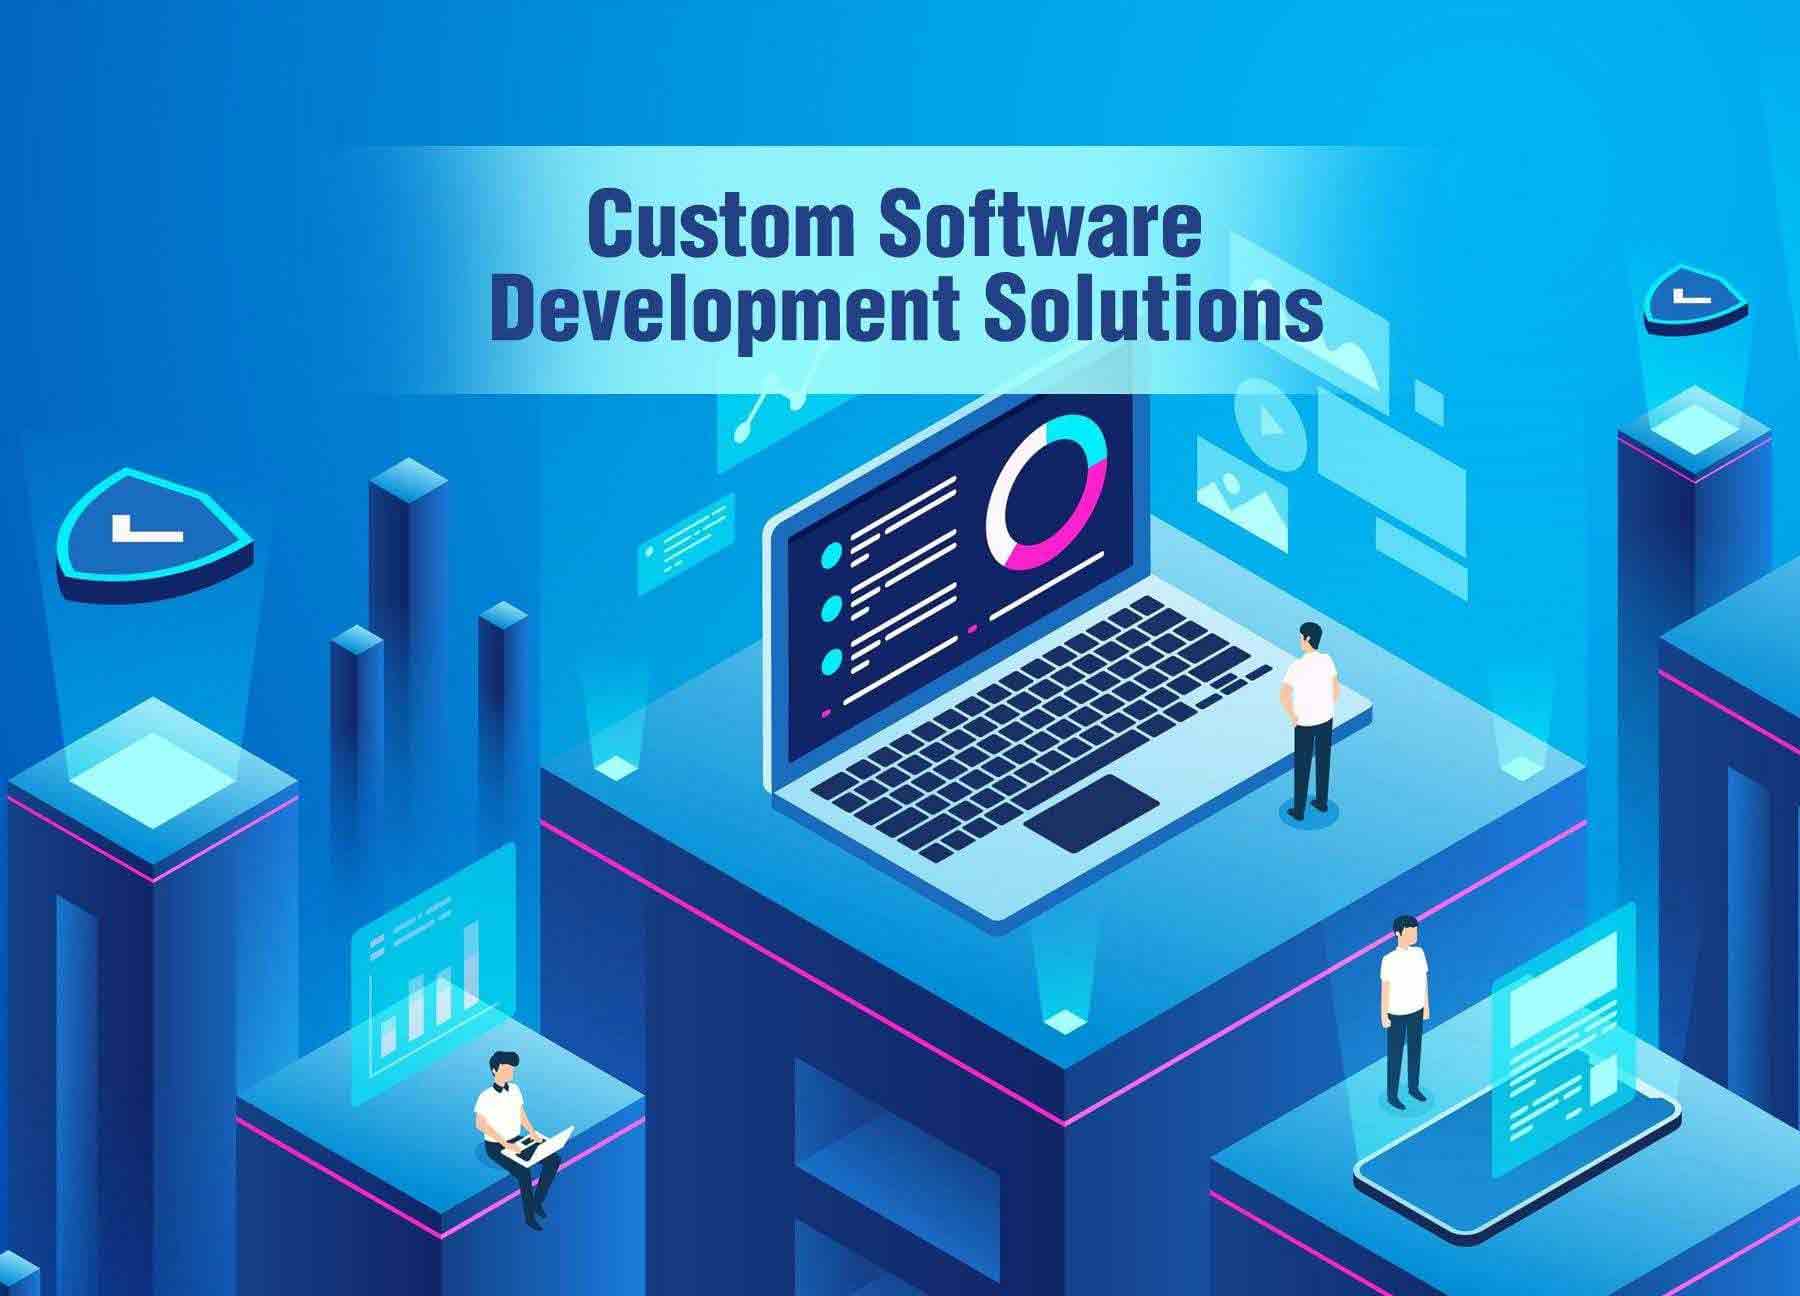 How does user experience shape custom software development?